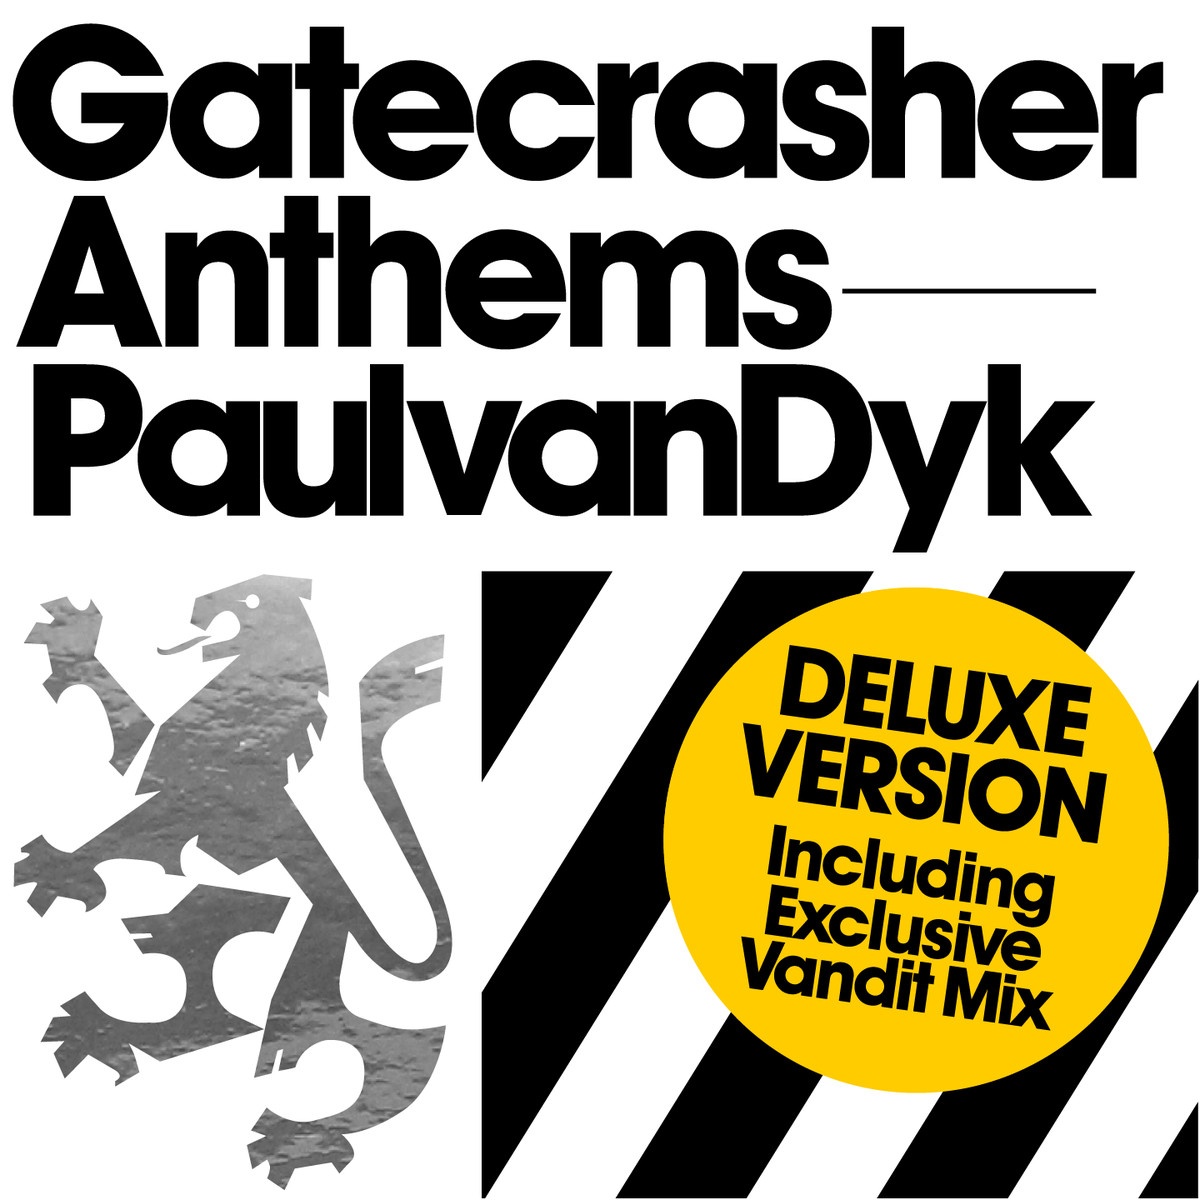 Gatecrasher Anthems - Paul Van Dyk